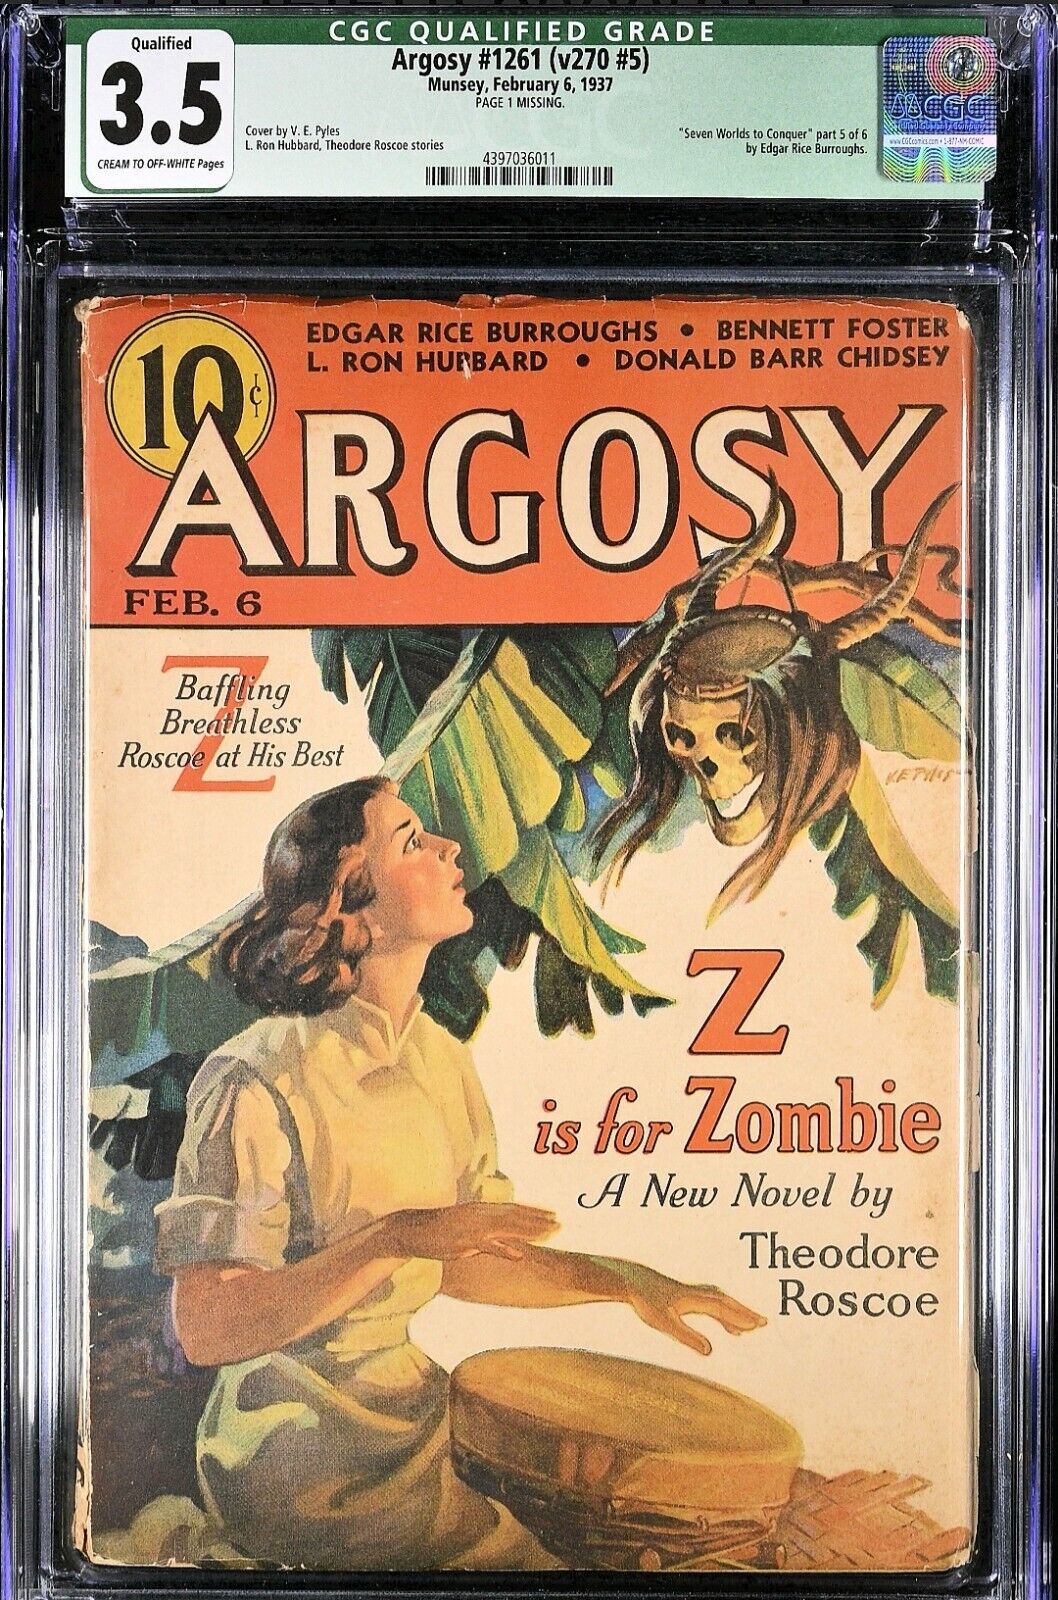 Argosy Pulp Feb 1937 CGC 3.5 Qualified Skull Cover Edgar Rice Burroughs Story 